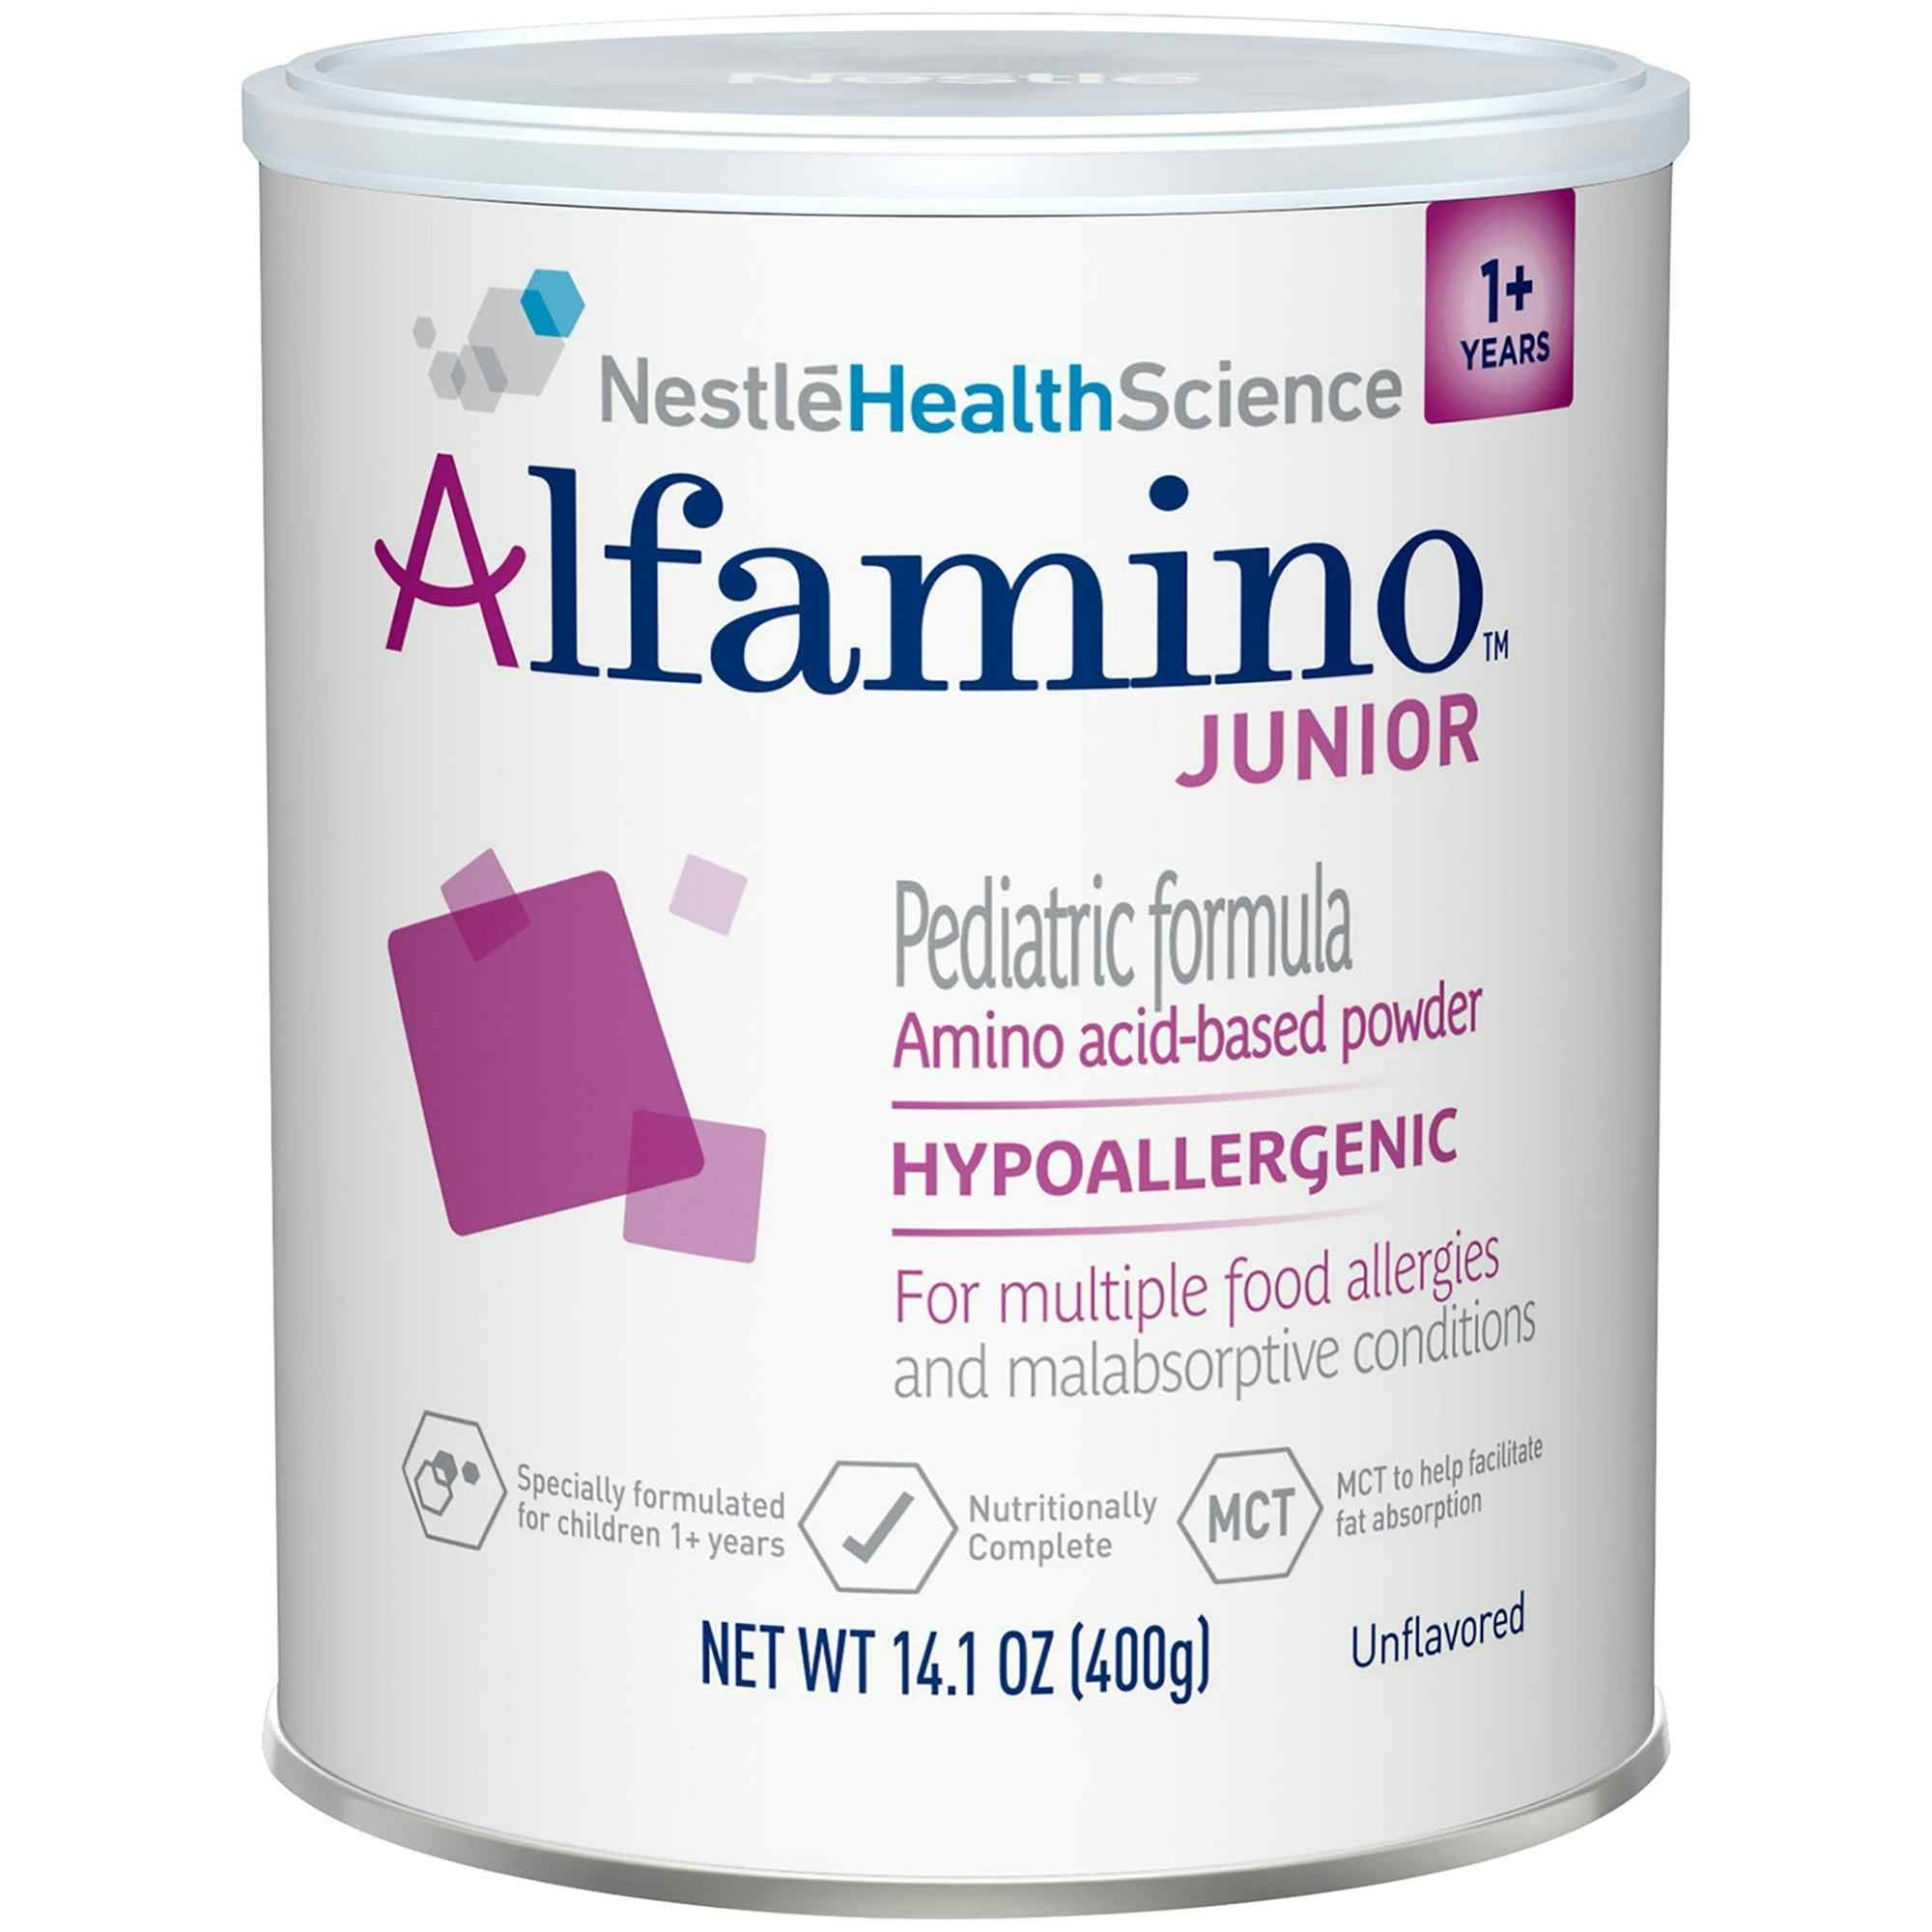 NestleHealthScience Alfamino Junior Pediatric Formula Amino Acid-Based Powder, 14.1 oz